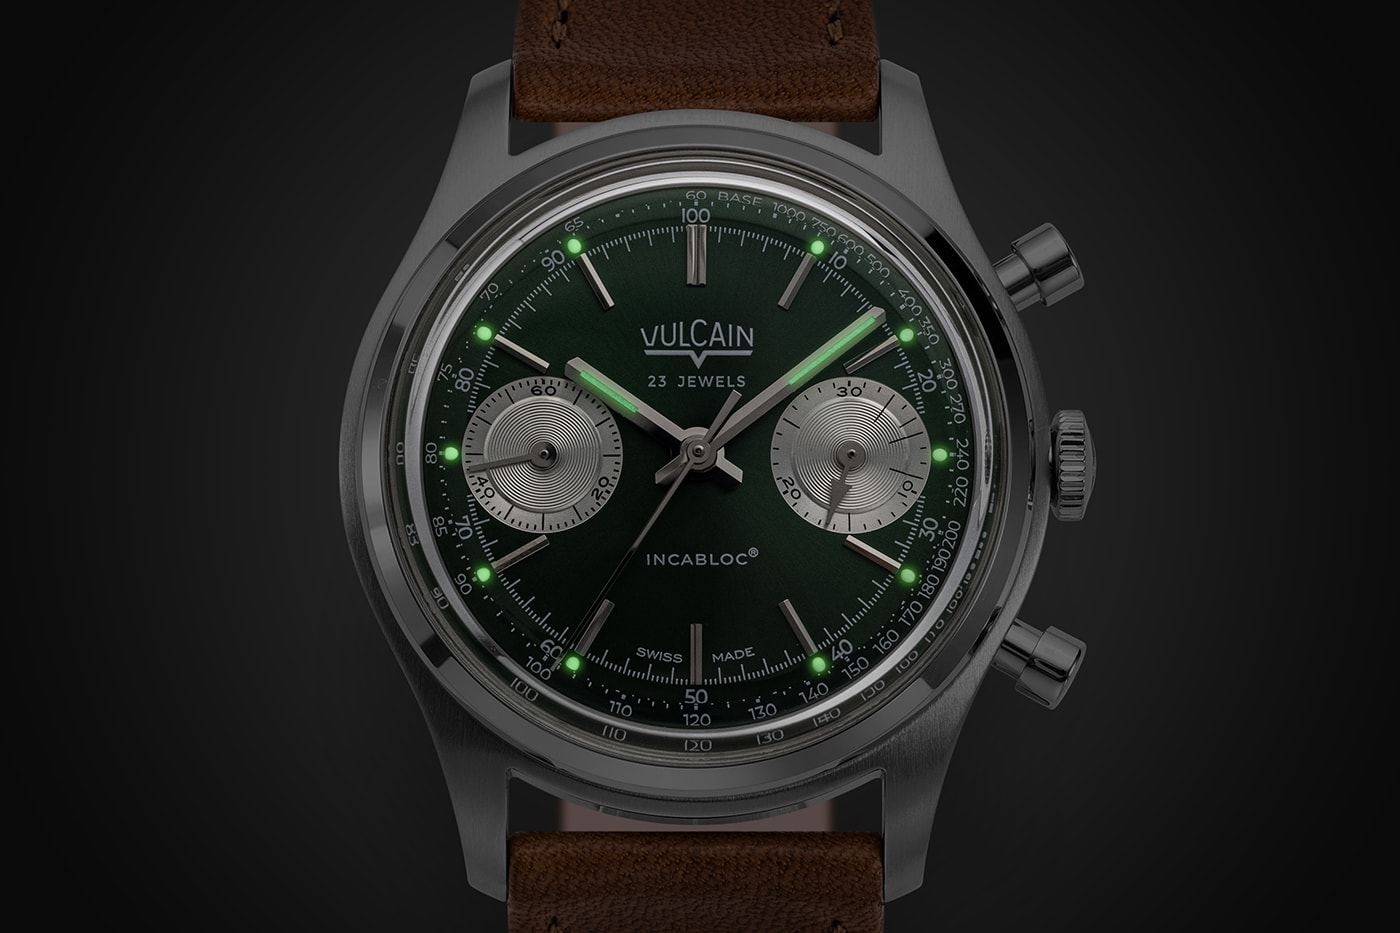 Vulcain Chronograph 1970s British Racing Green Dial Release Info